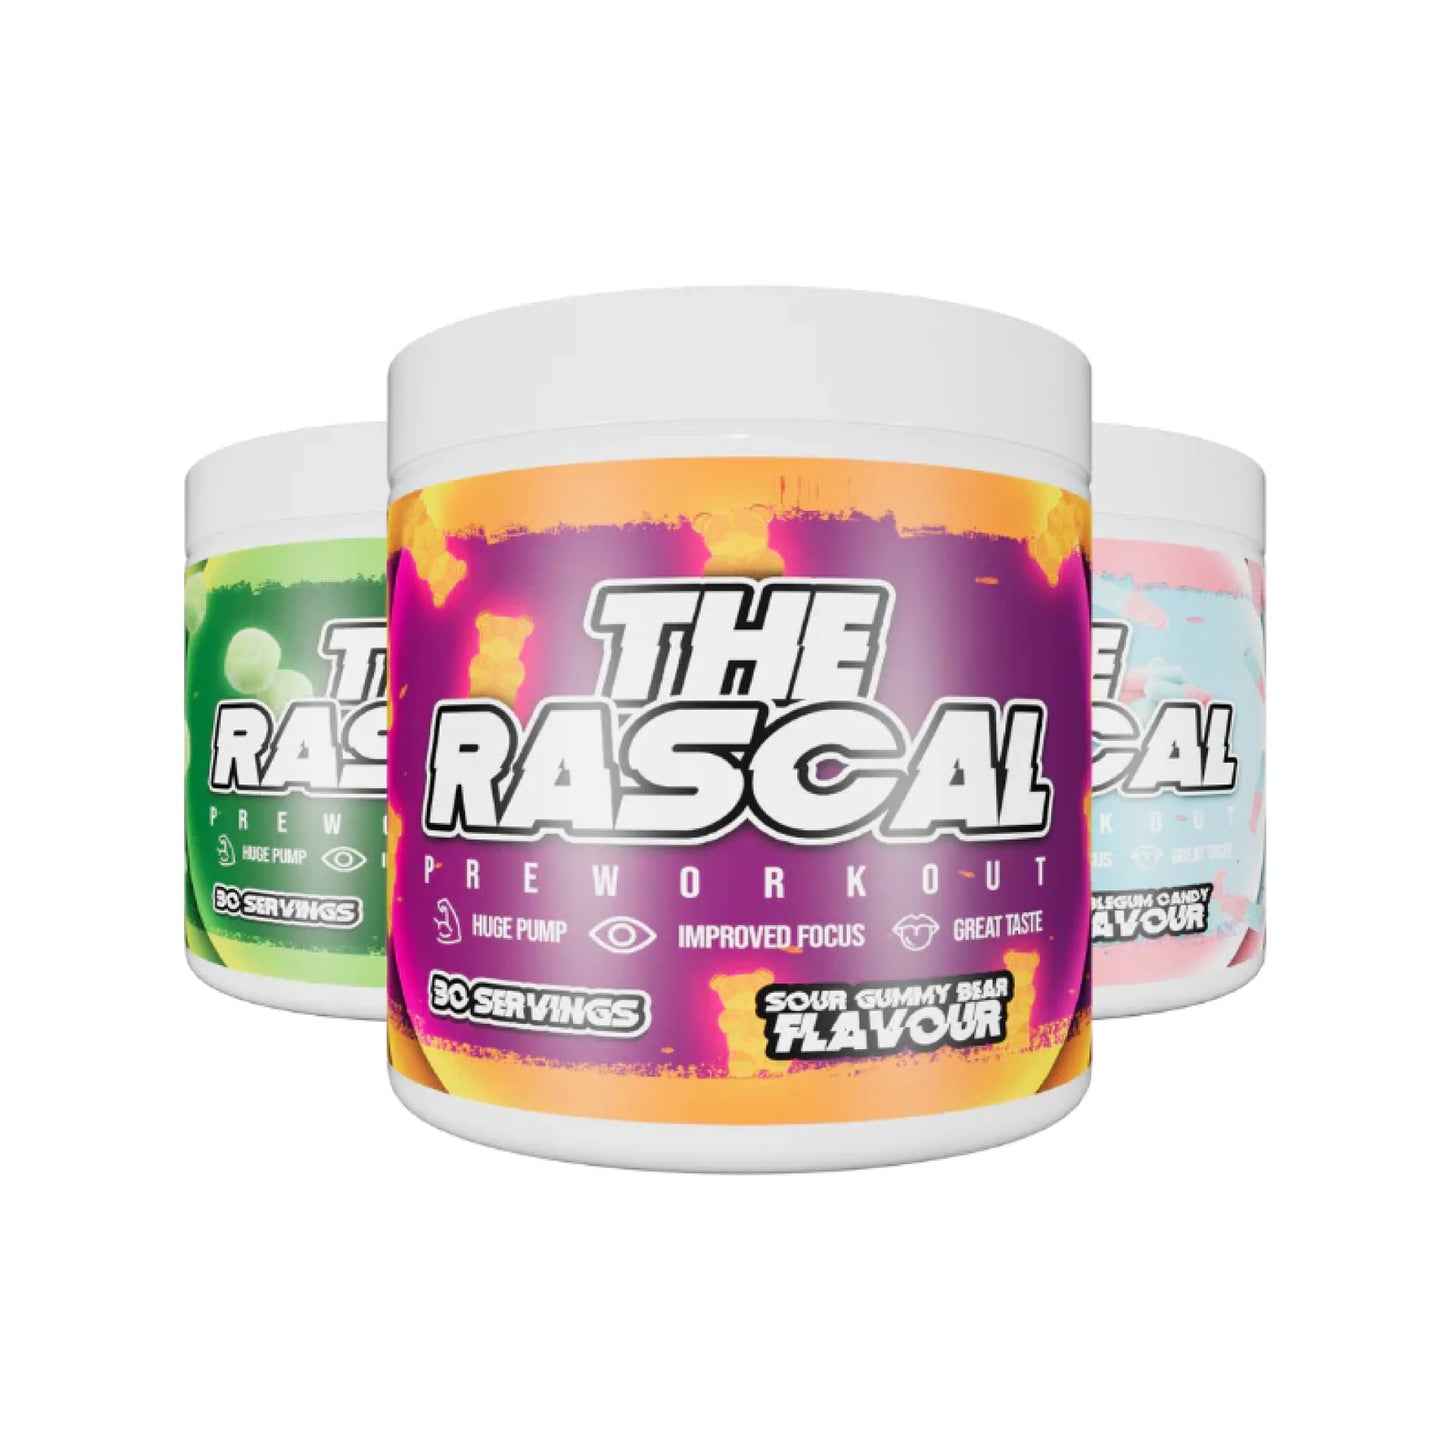 The Rascal Pre Workout